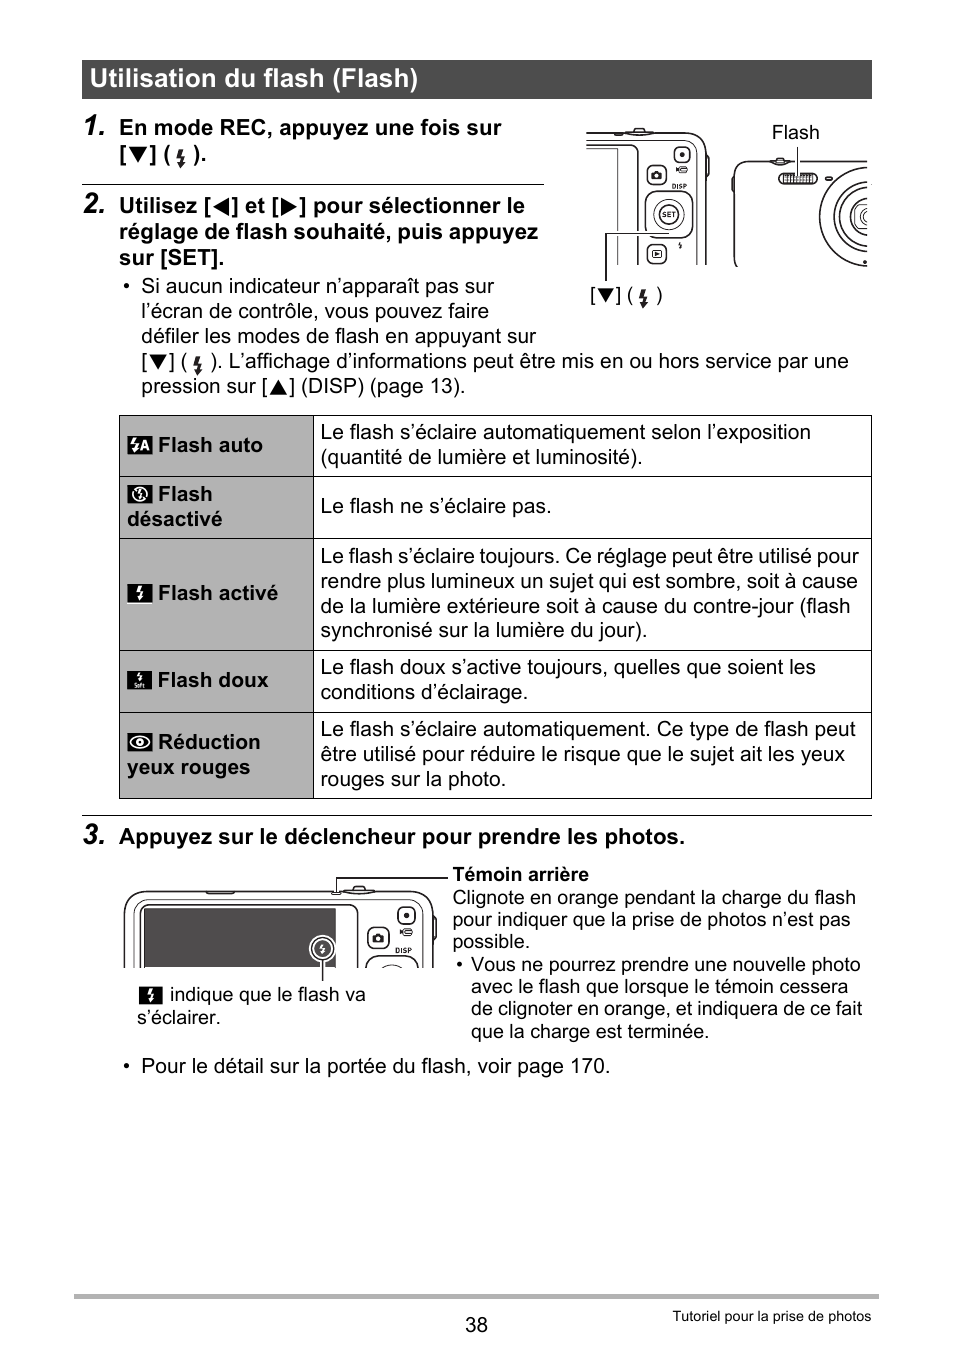 Utilisation du flash (flash) | Casio EX-Z800 Manuel d'utilisation | Page 38 / 187